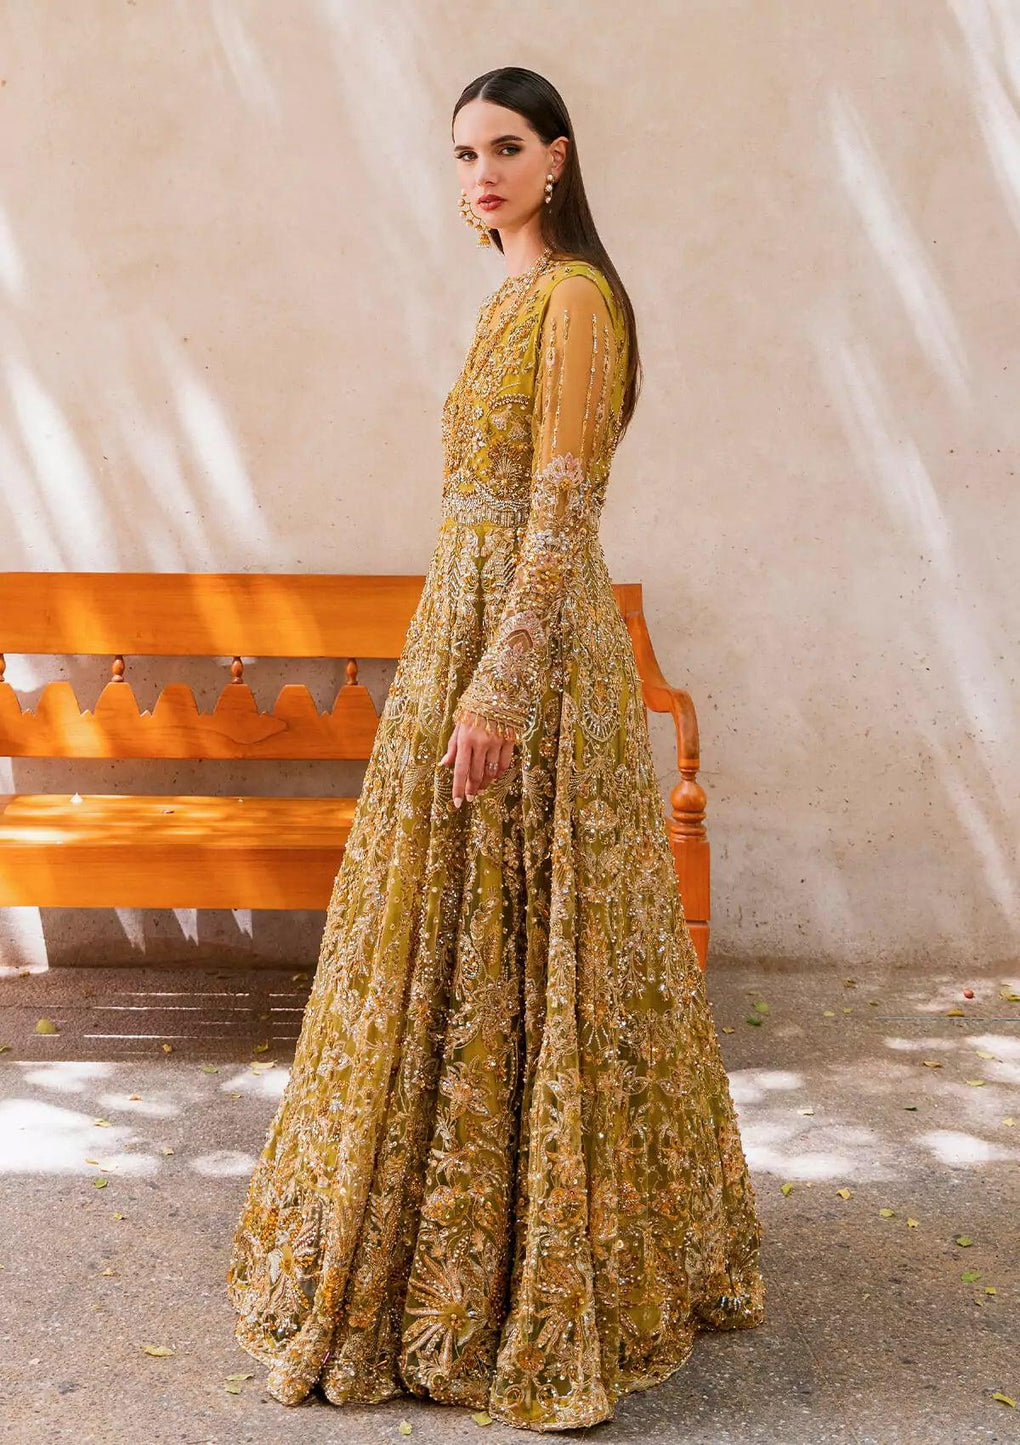 Buy Now Evara Wedding 2023 by Elaf Premium | EEB-05 HENNA Online in USA, UK, Canada & Worldwide at Empress Clothing.